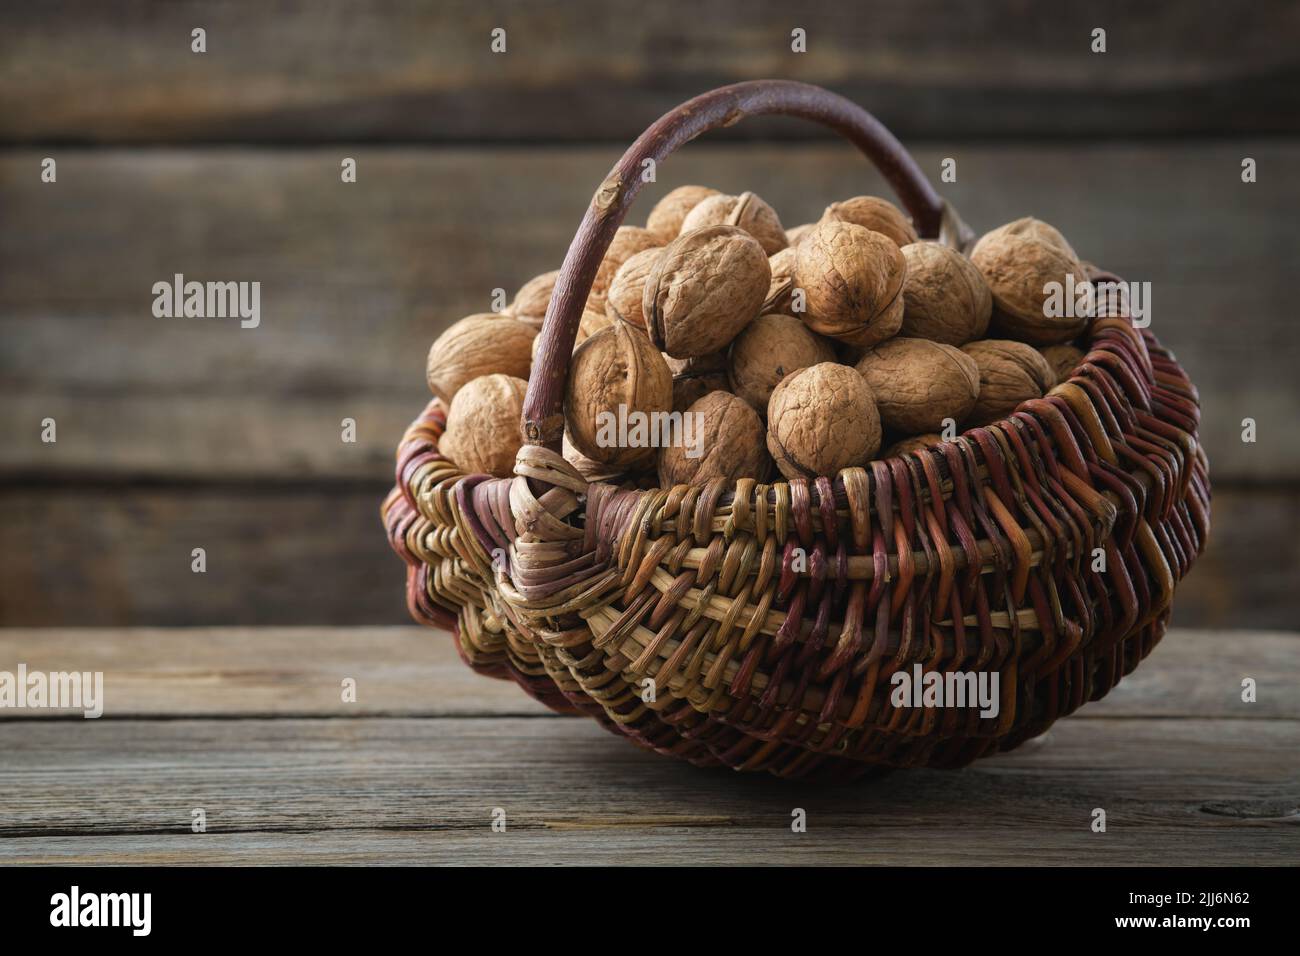 Wicker basket full of walnuts on wooden table. Stock Photo